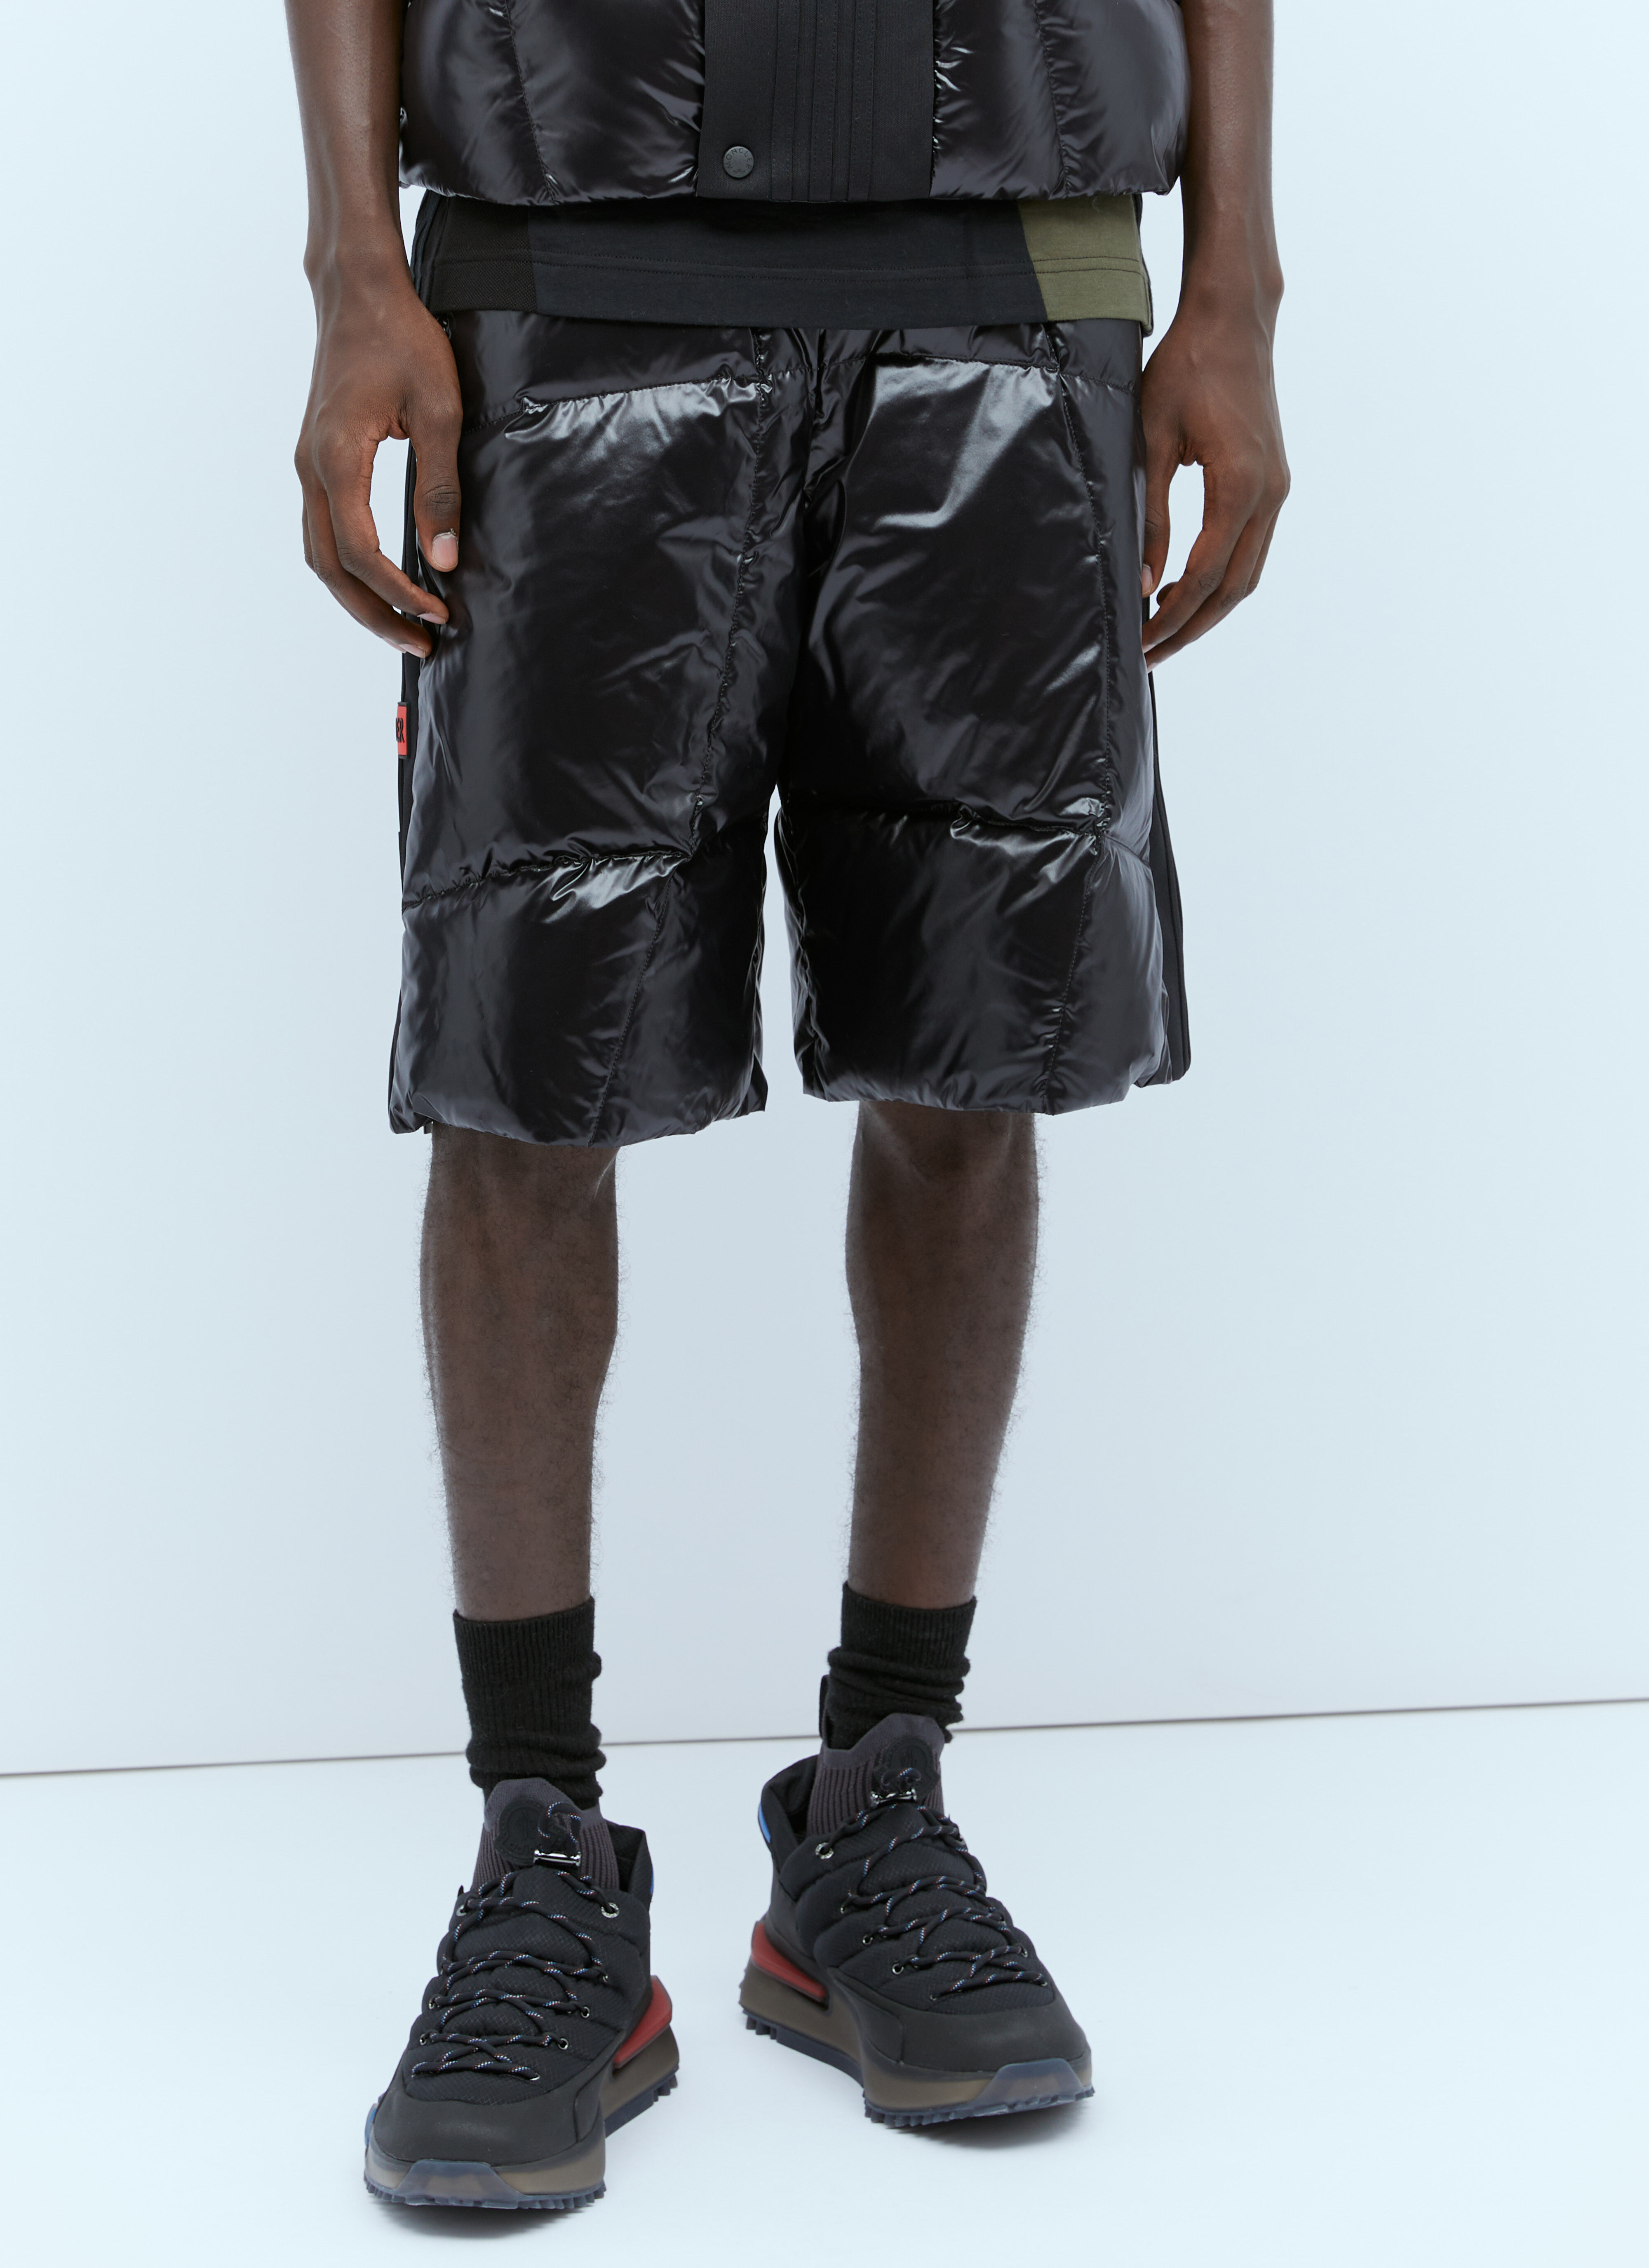 Moncler x Roc Nation designed by Jay-Z Down Track Shorts Black mrn0156002